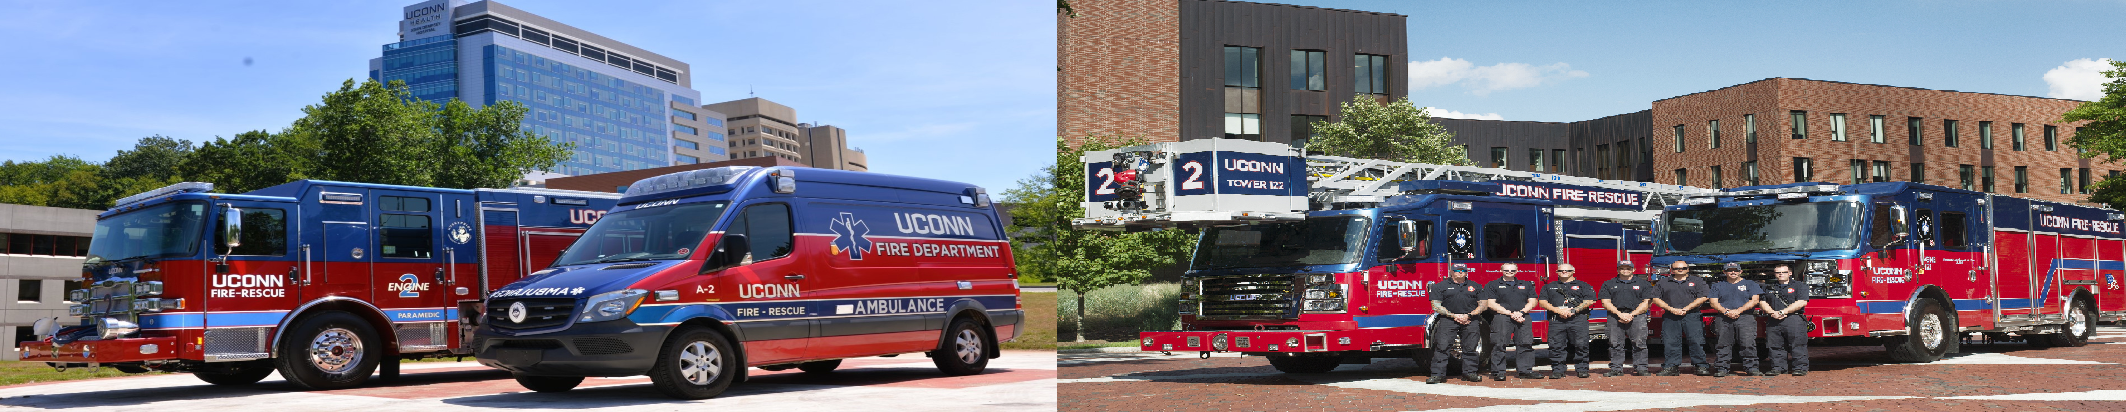 UConn Firefighters posing in front of Firetrucks